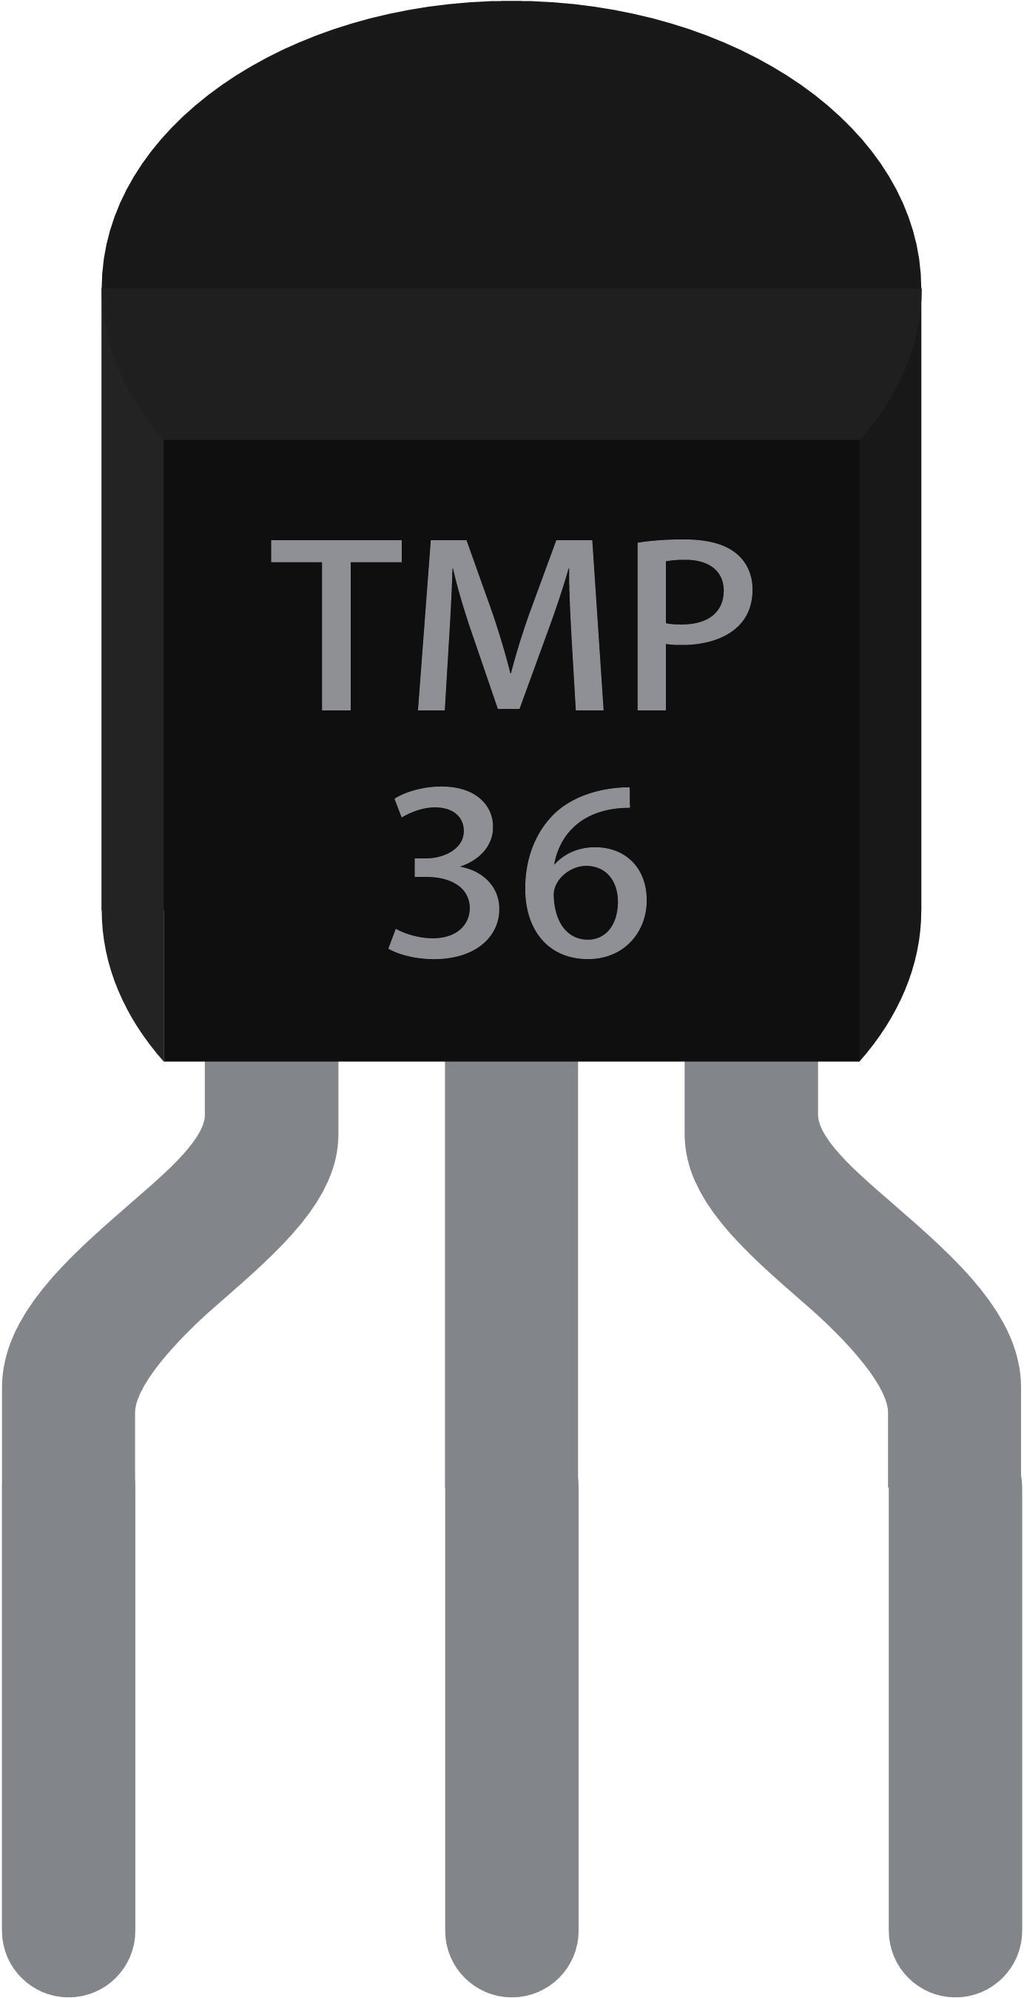 7.Temperature Sensor Component List 2 3 4 x Micro:bit Board x